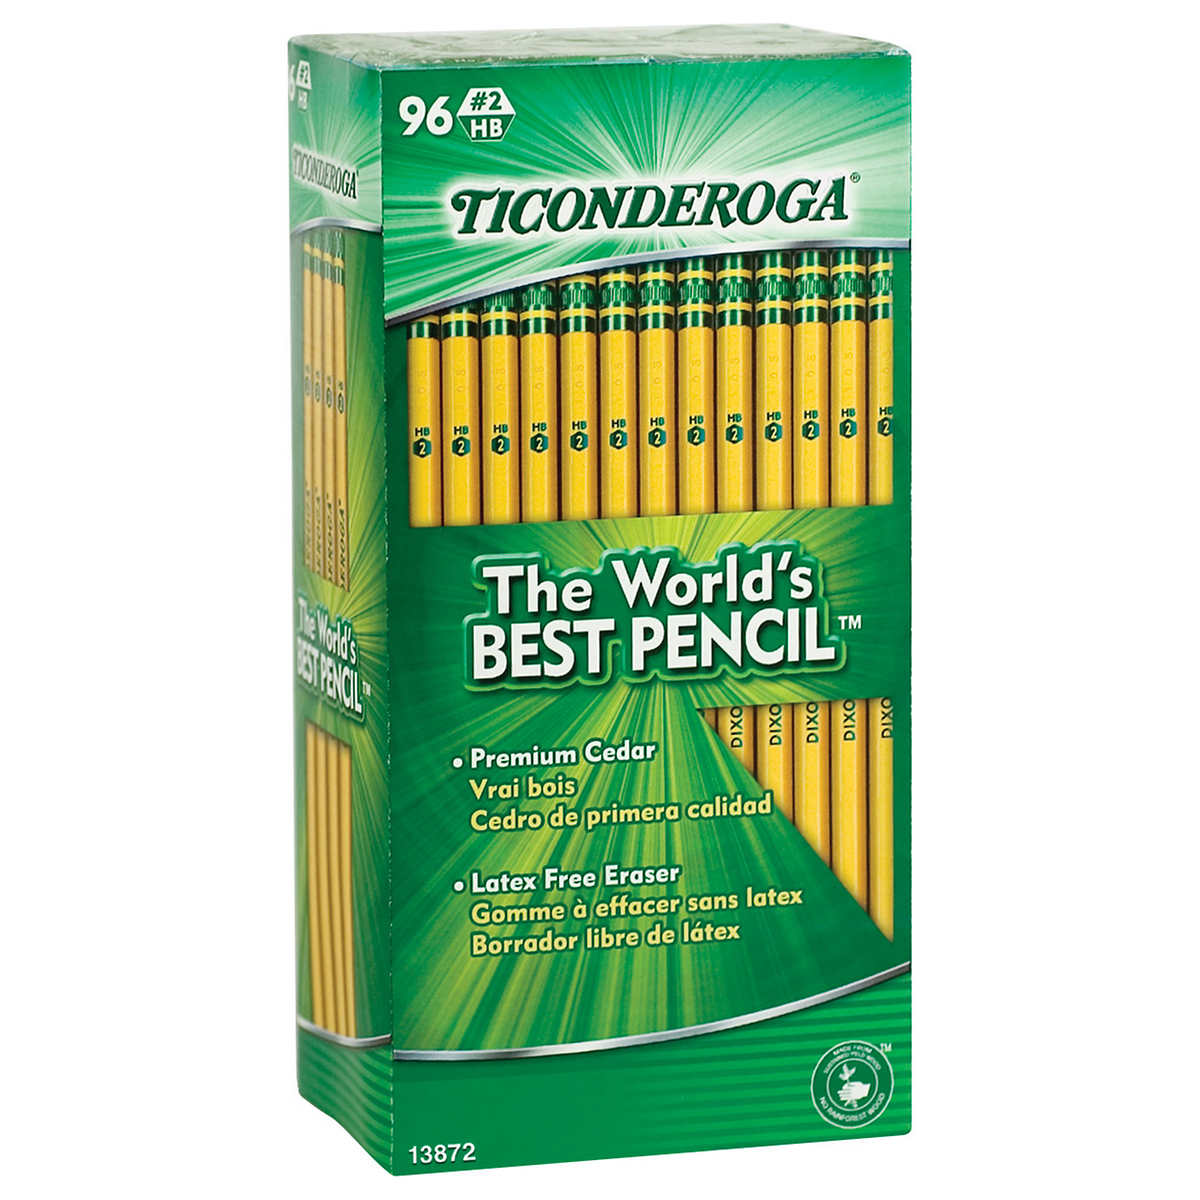 2 Woodcased Yellow Barrel HB Pencils 96-Count for sale online 13872 Dixon Ticonderoga No 